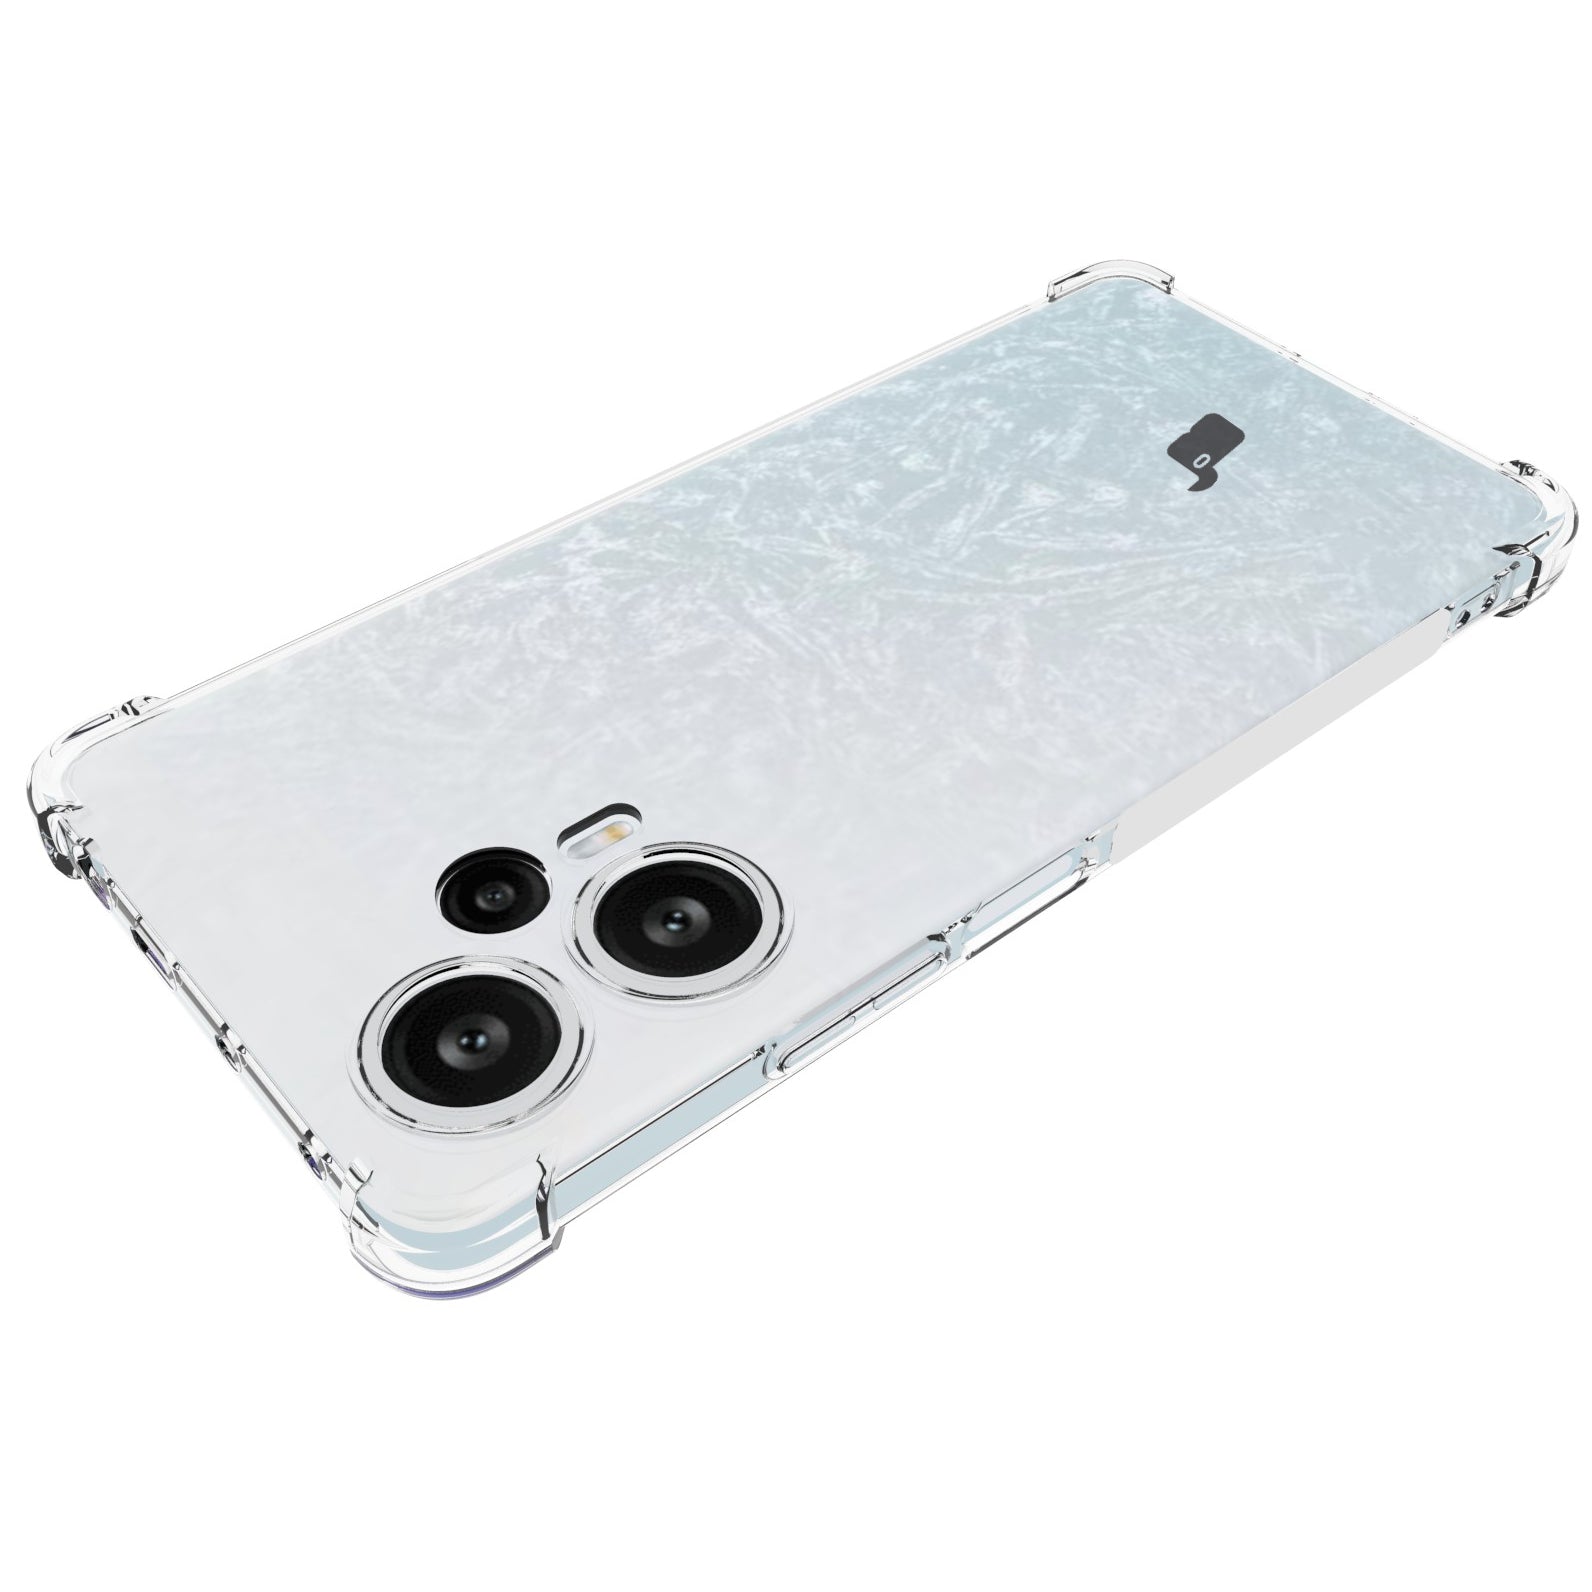 Flexible Schutzhülle für Xiaomi Pocophone F5, Bizon Case Salpa, Transparent